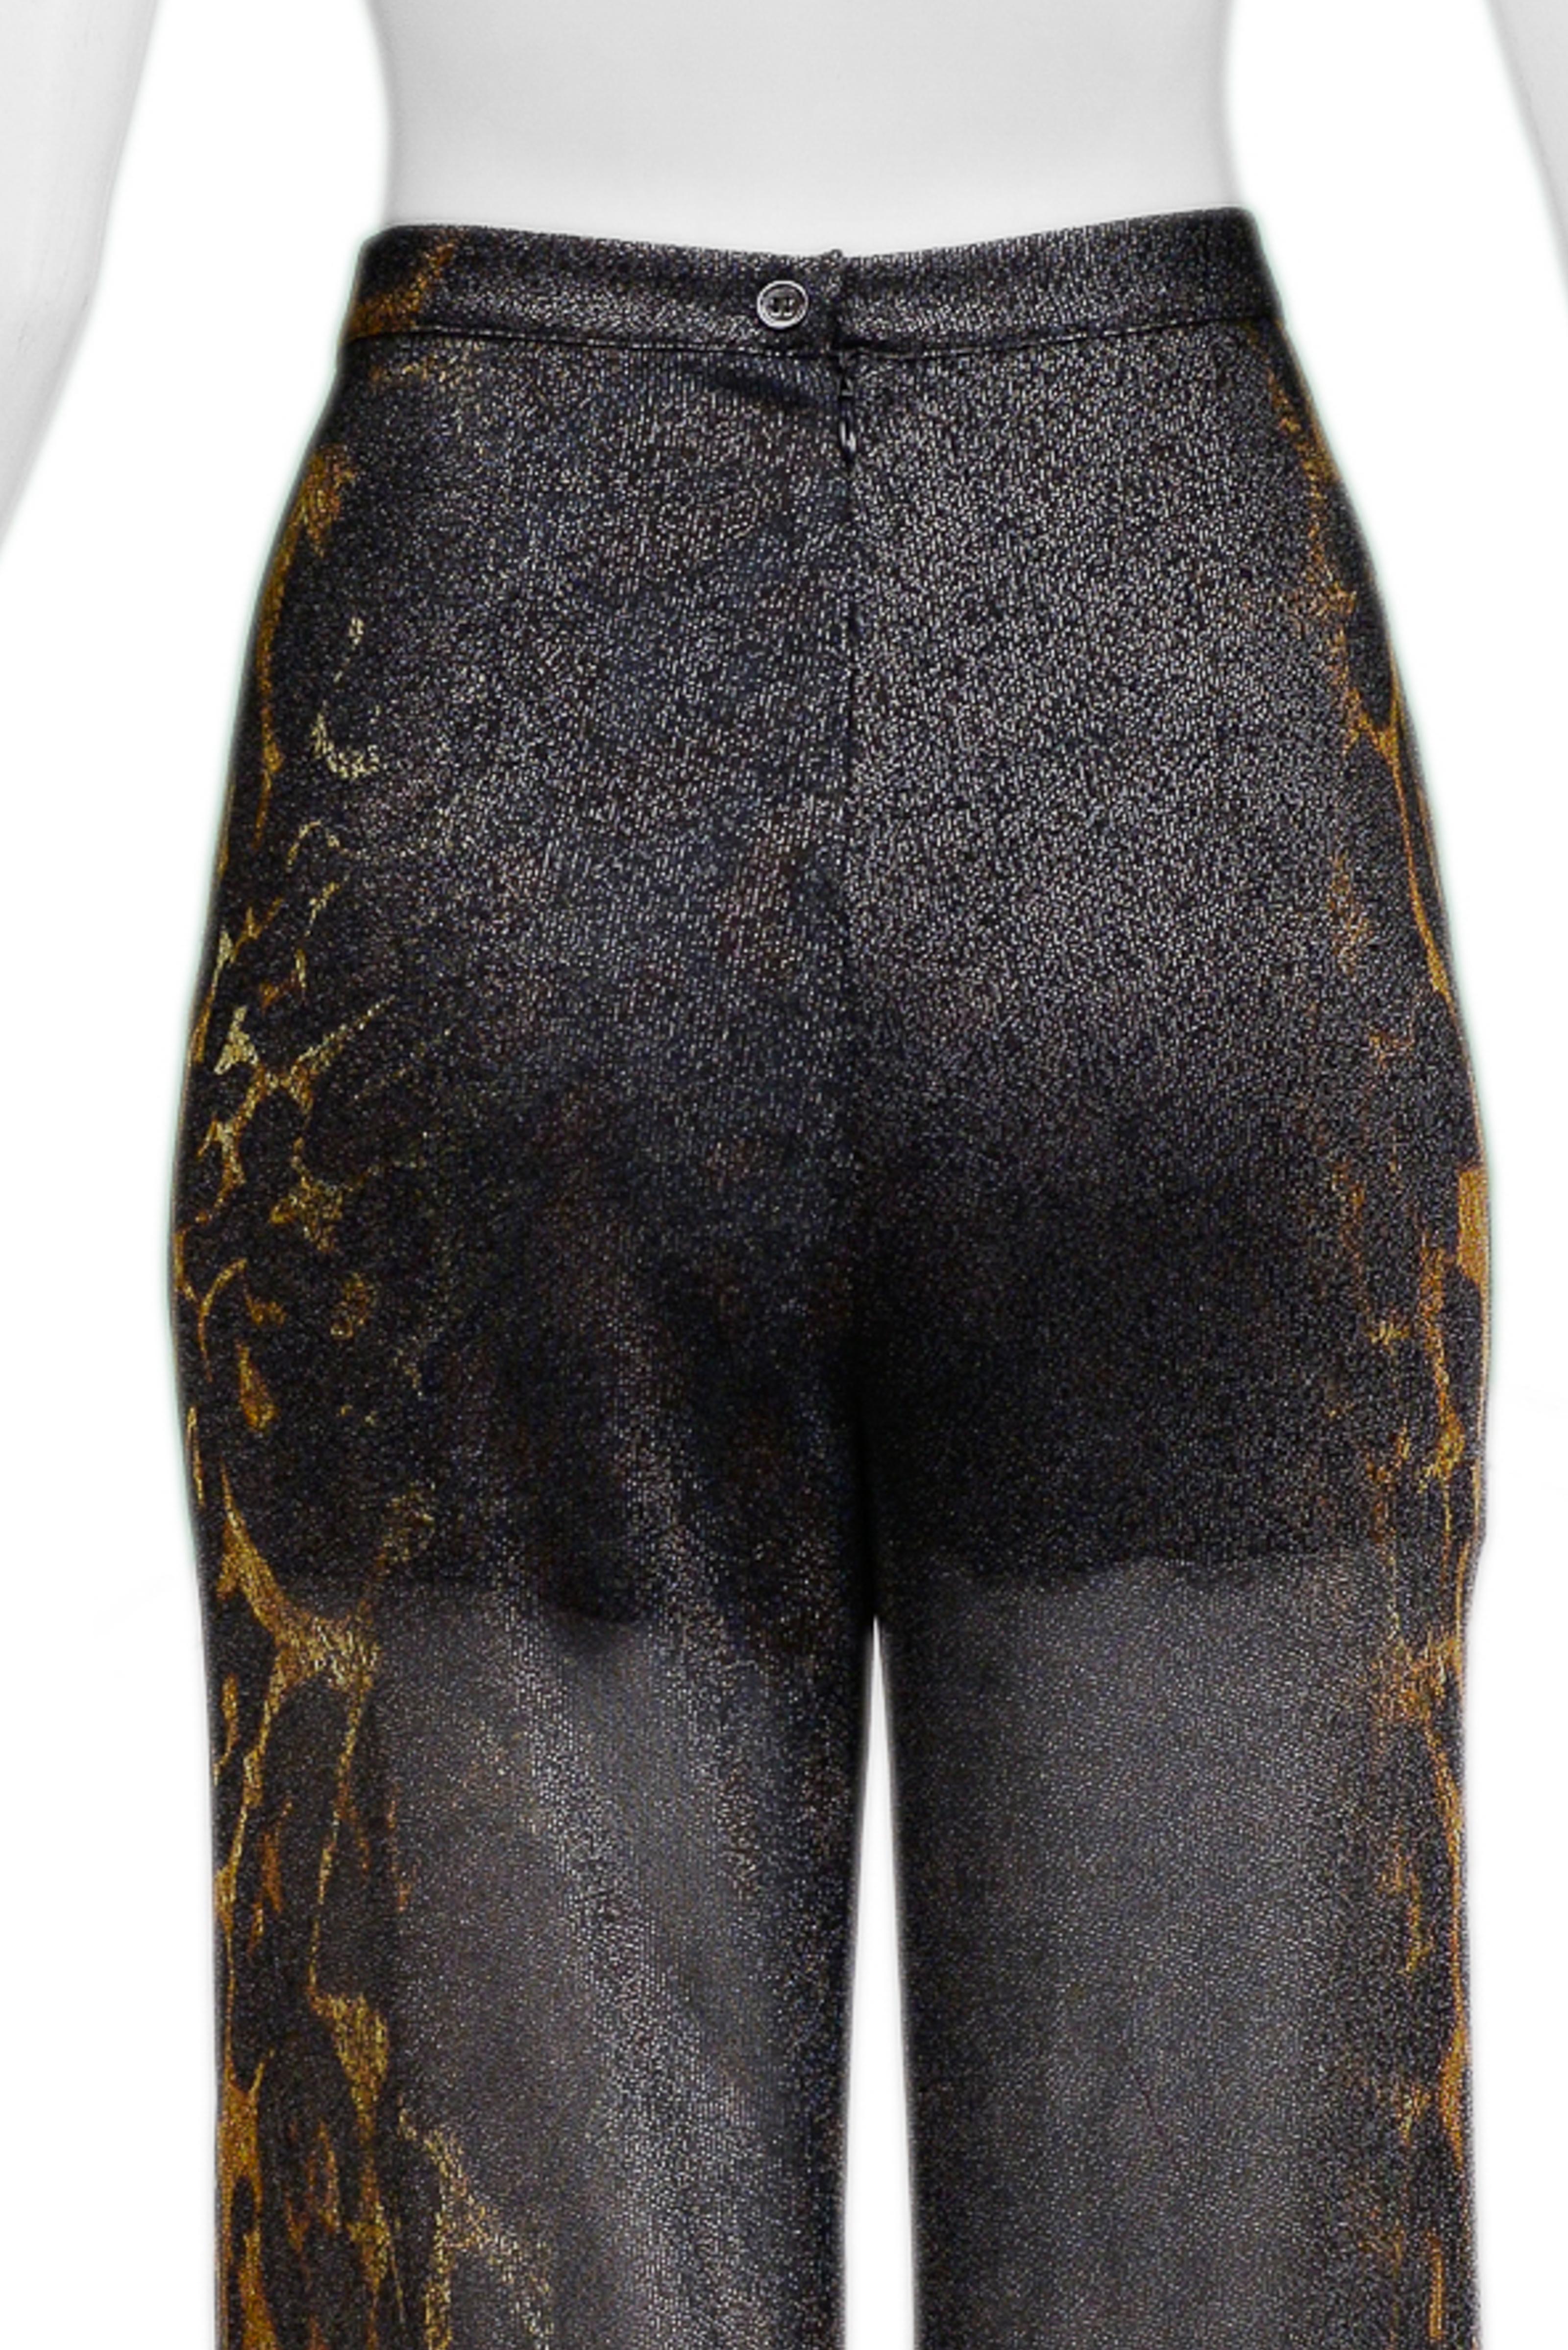 Gianfranco Ferre Black & Leopard Print Sheer Lurex Disco Pants 4